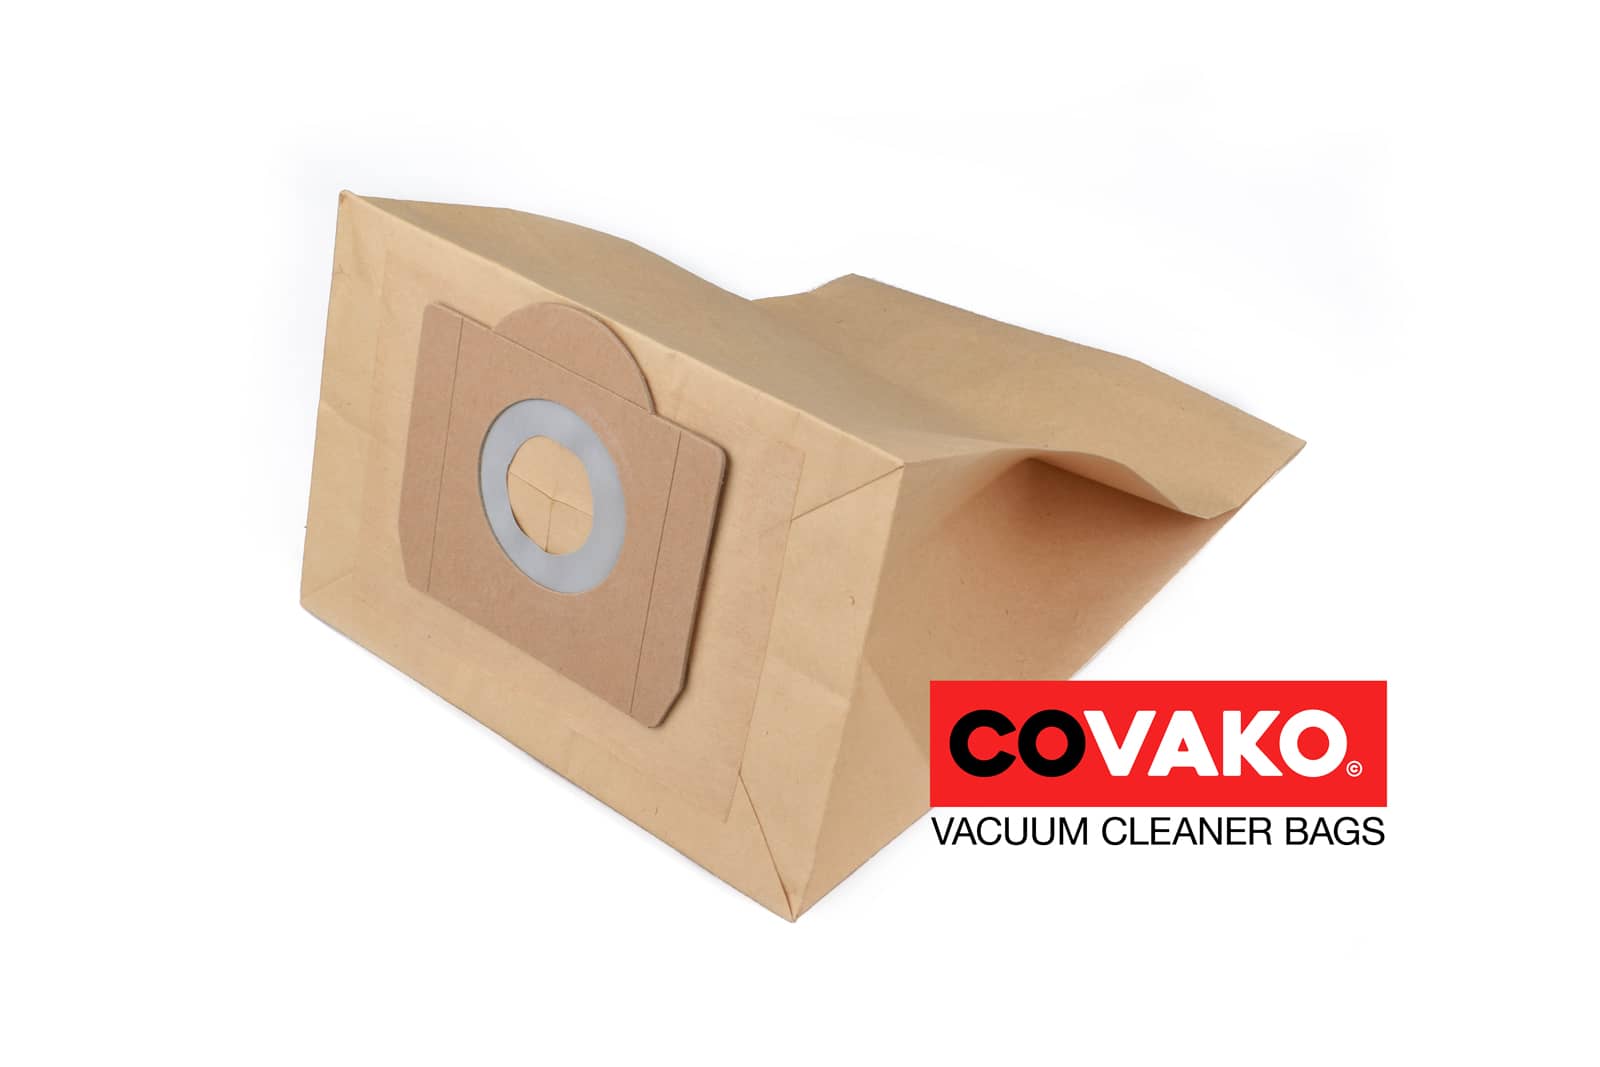 Soteco Dakota E XP 215 / Paper - Soteco vacuum cleaner bags